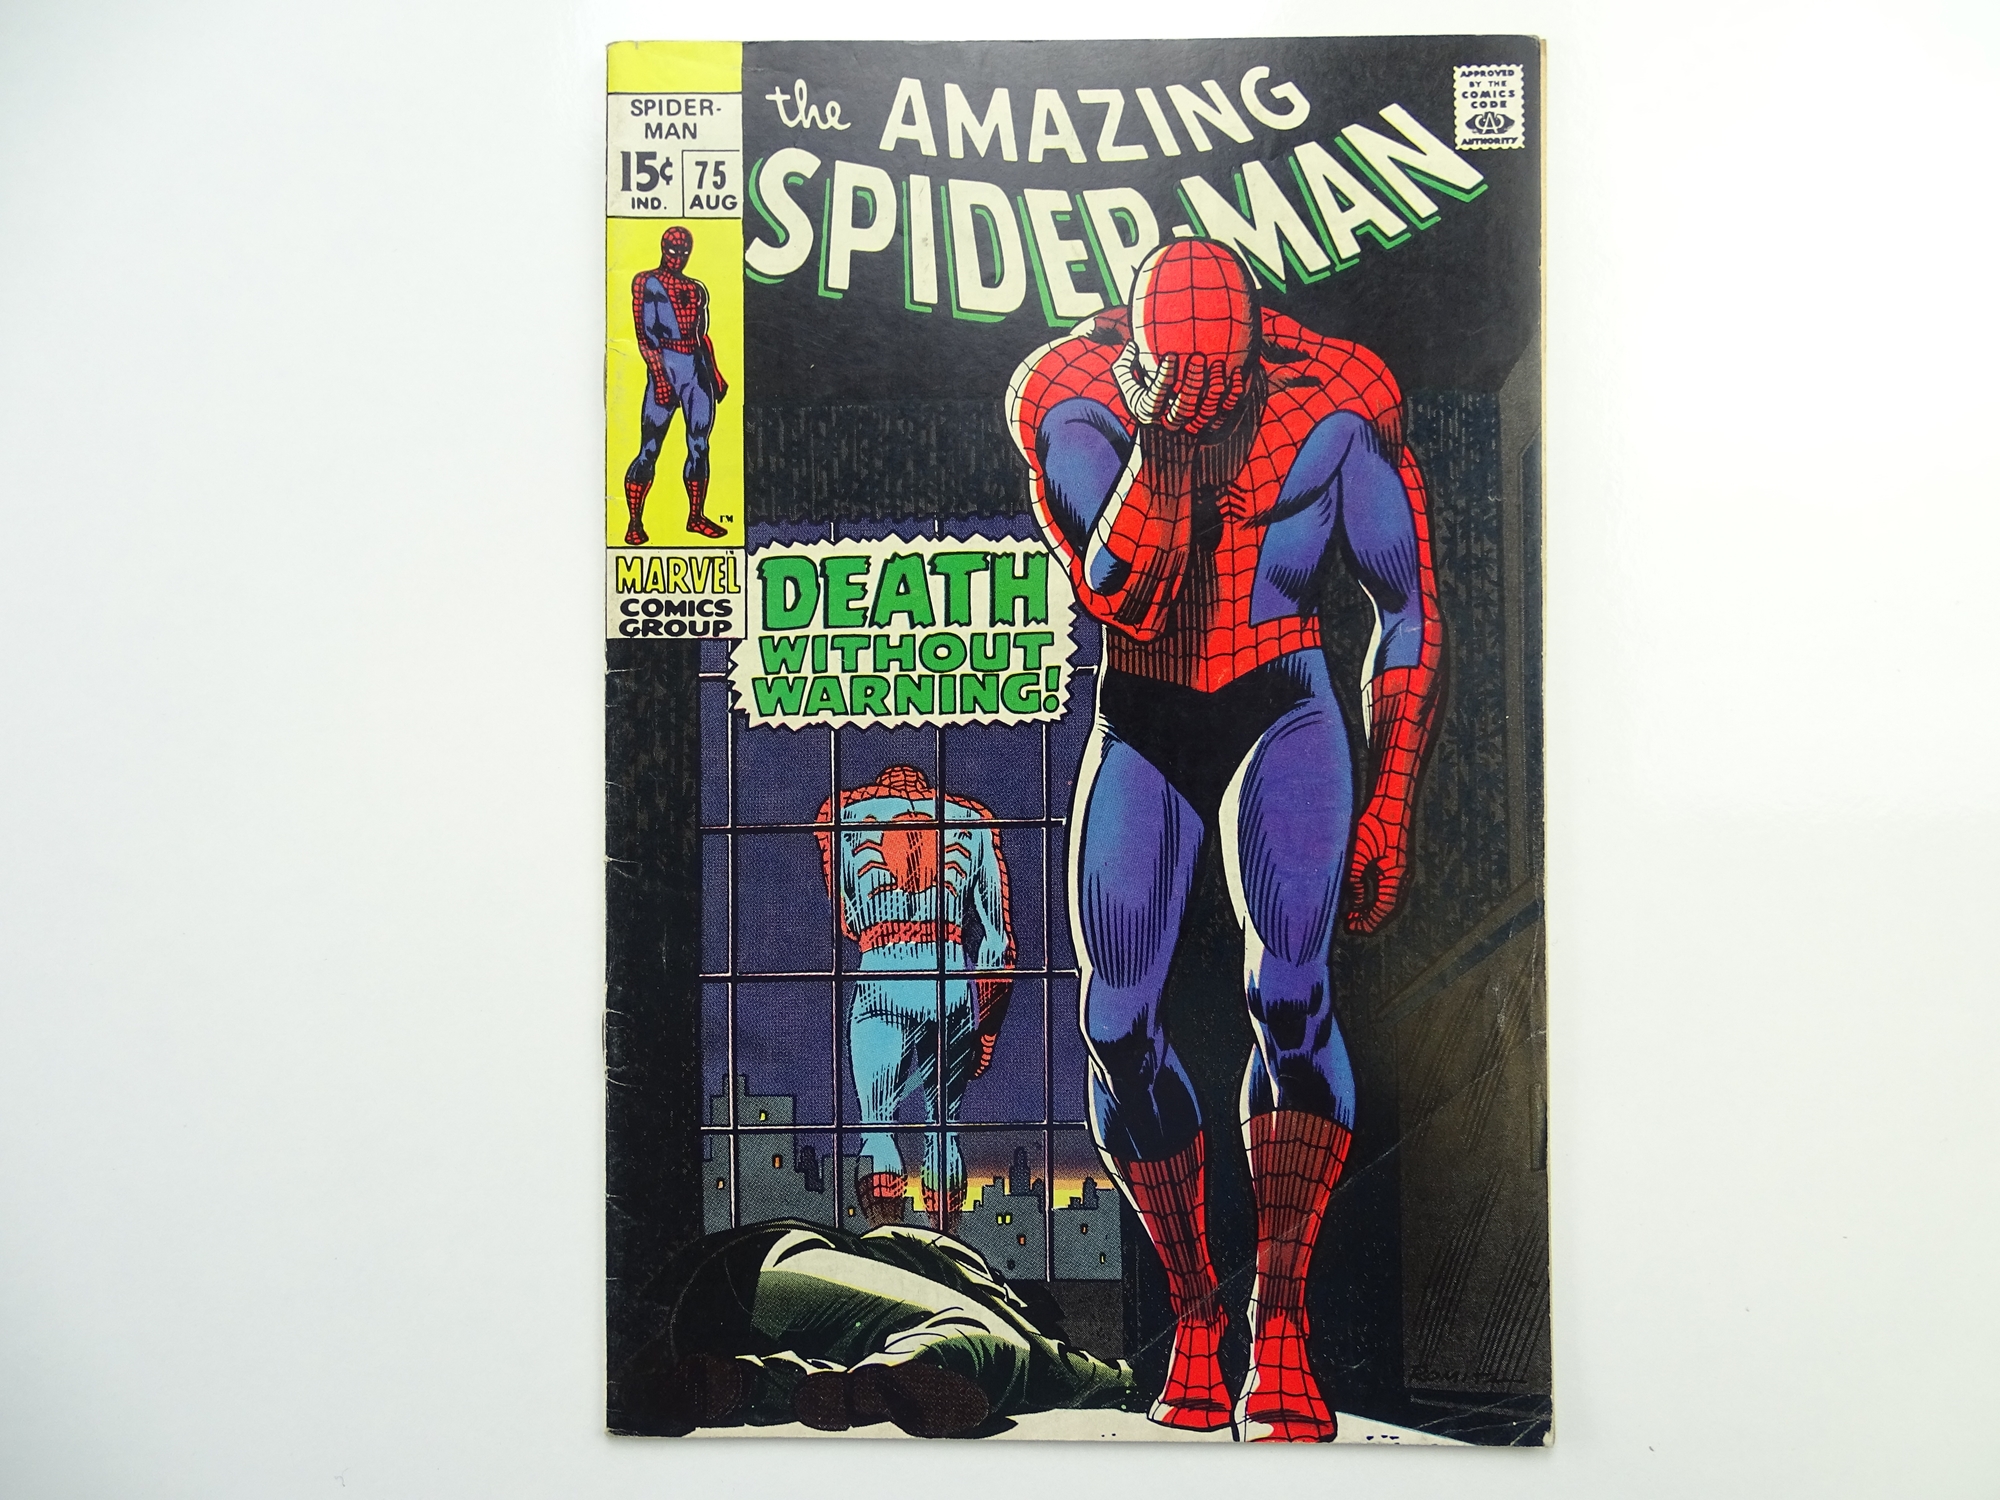 AMAZING SPIDER-MAN # 75 - (1969 - MARVEL - Cents Copy) - 'Death' of Silvermane + Lizard cameo - John